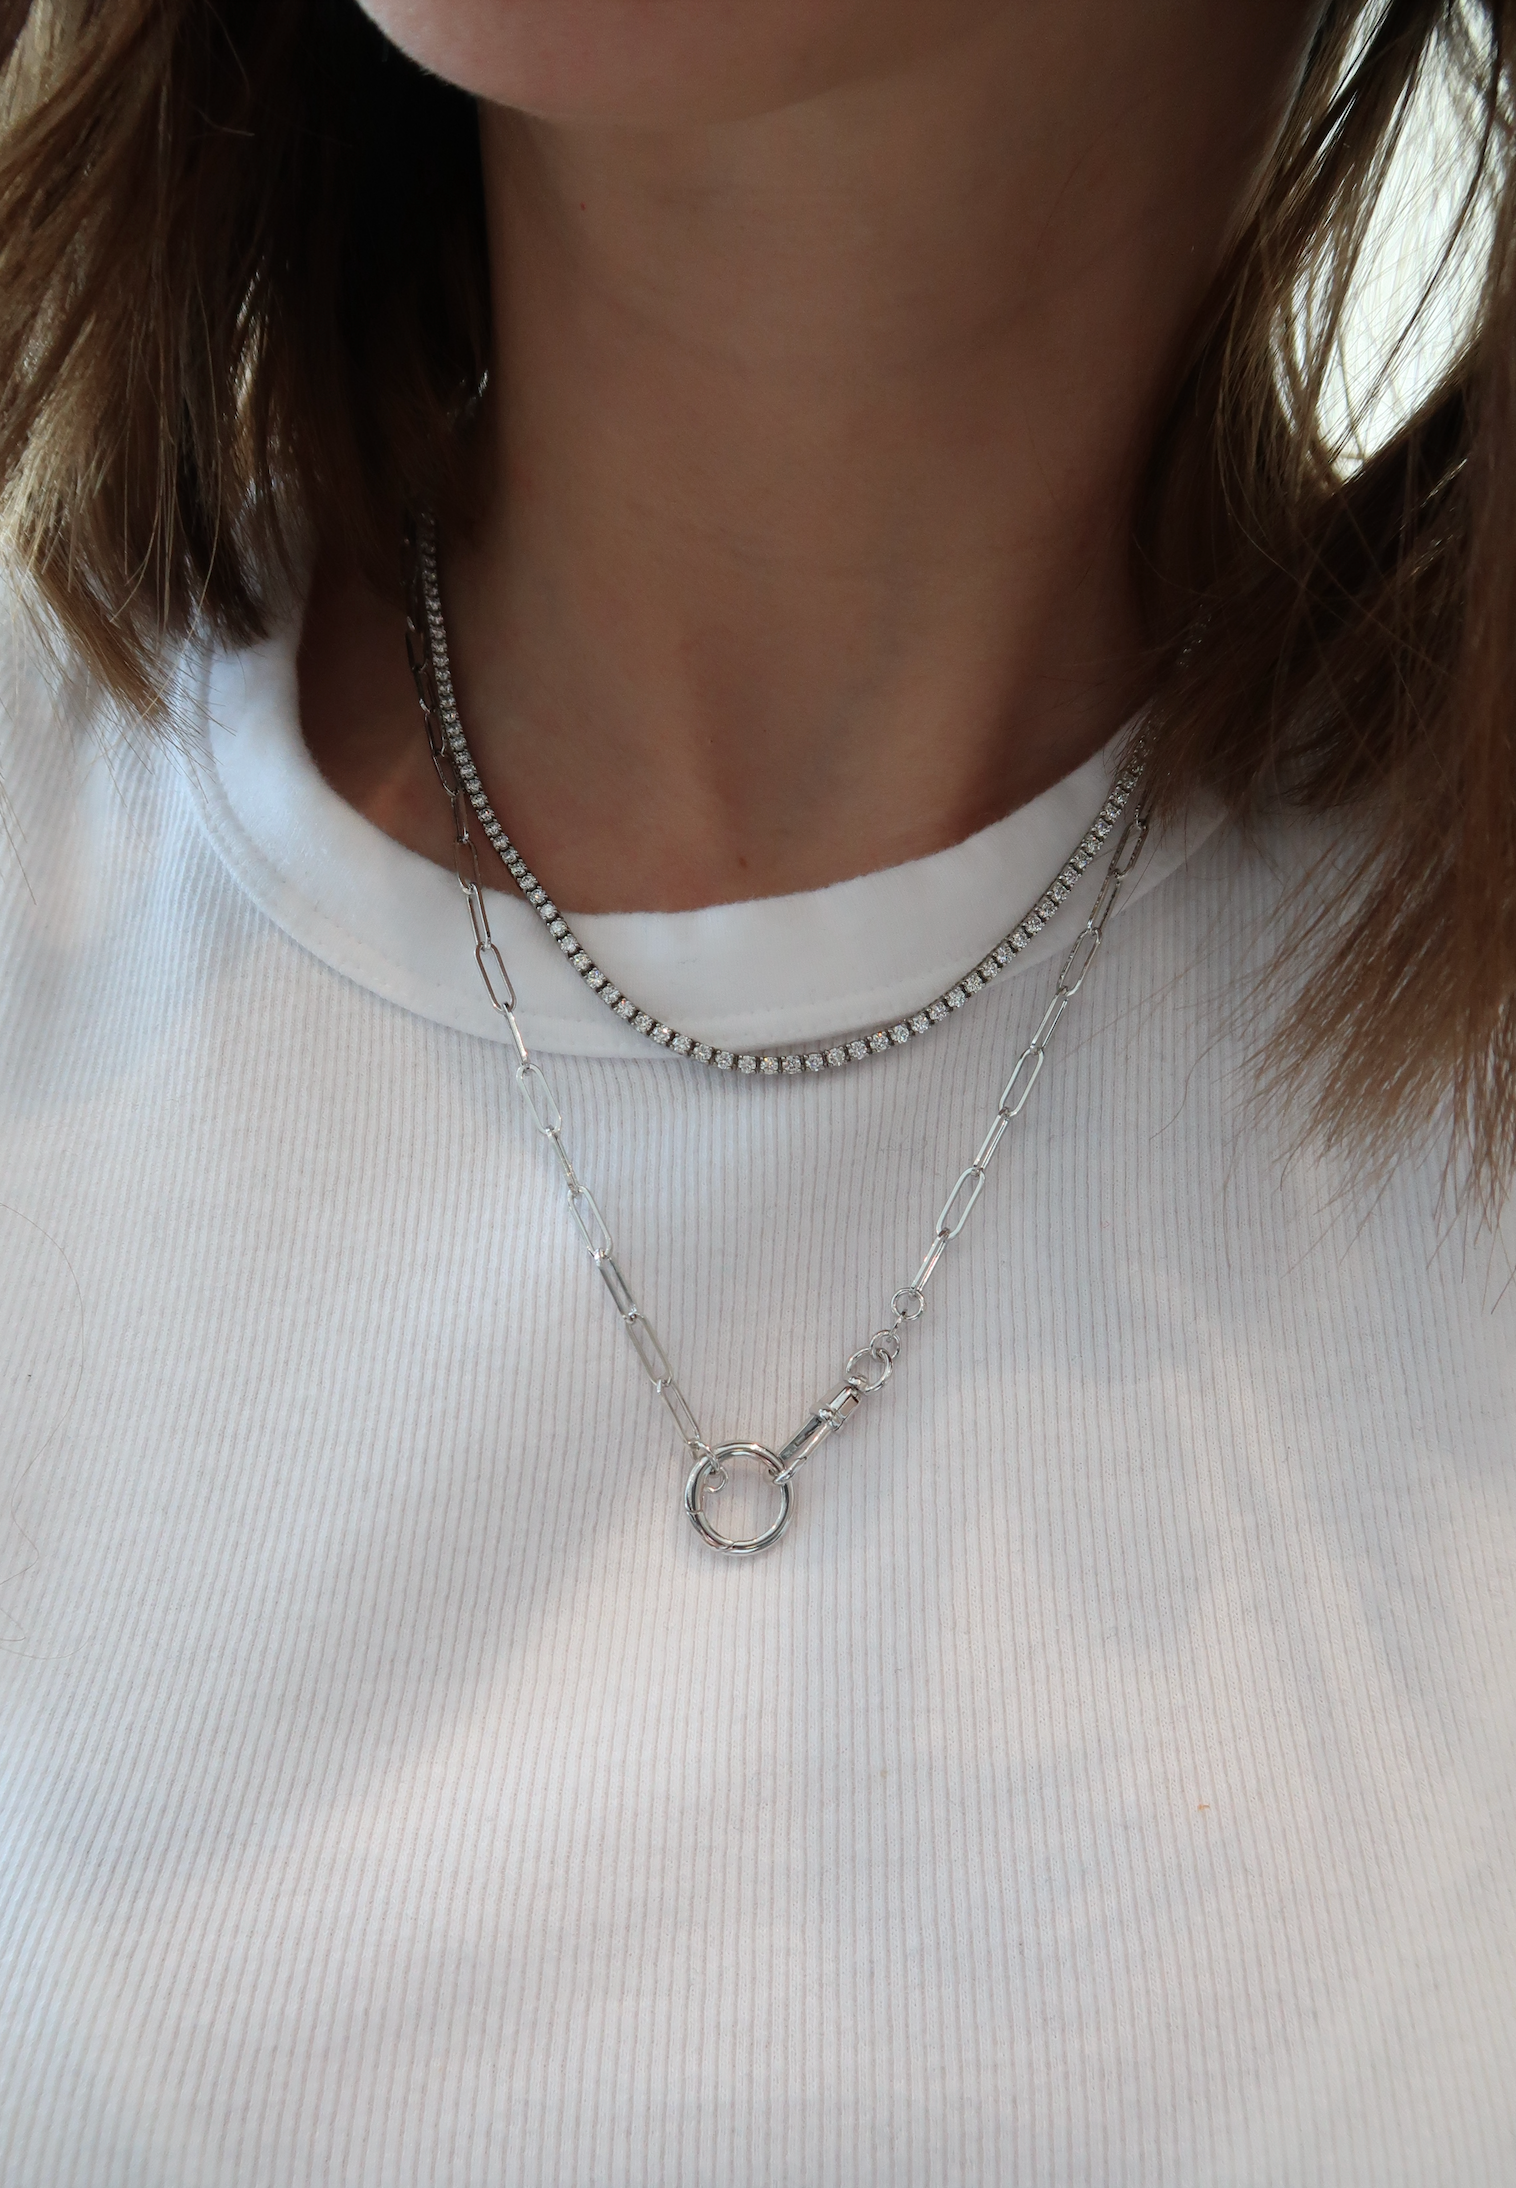 1. Ring Holder Necklace